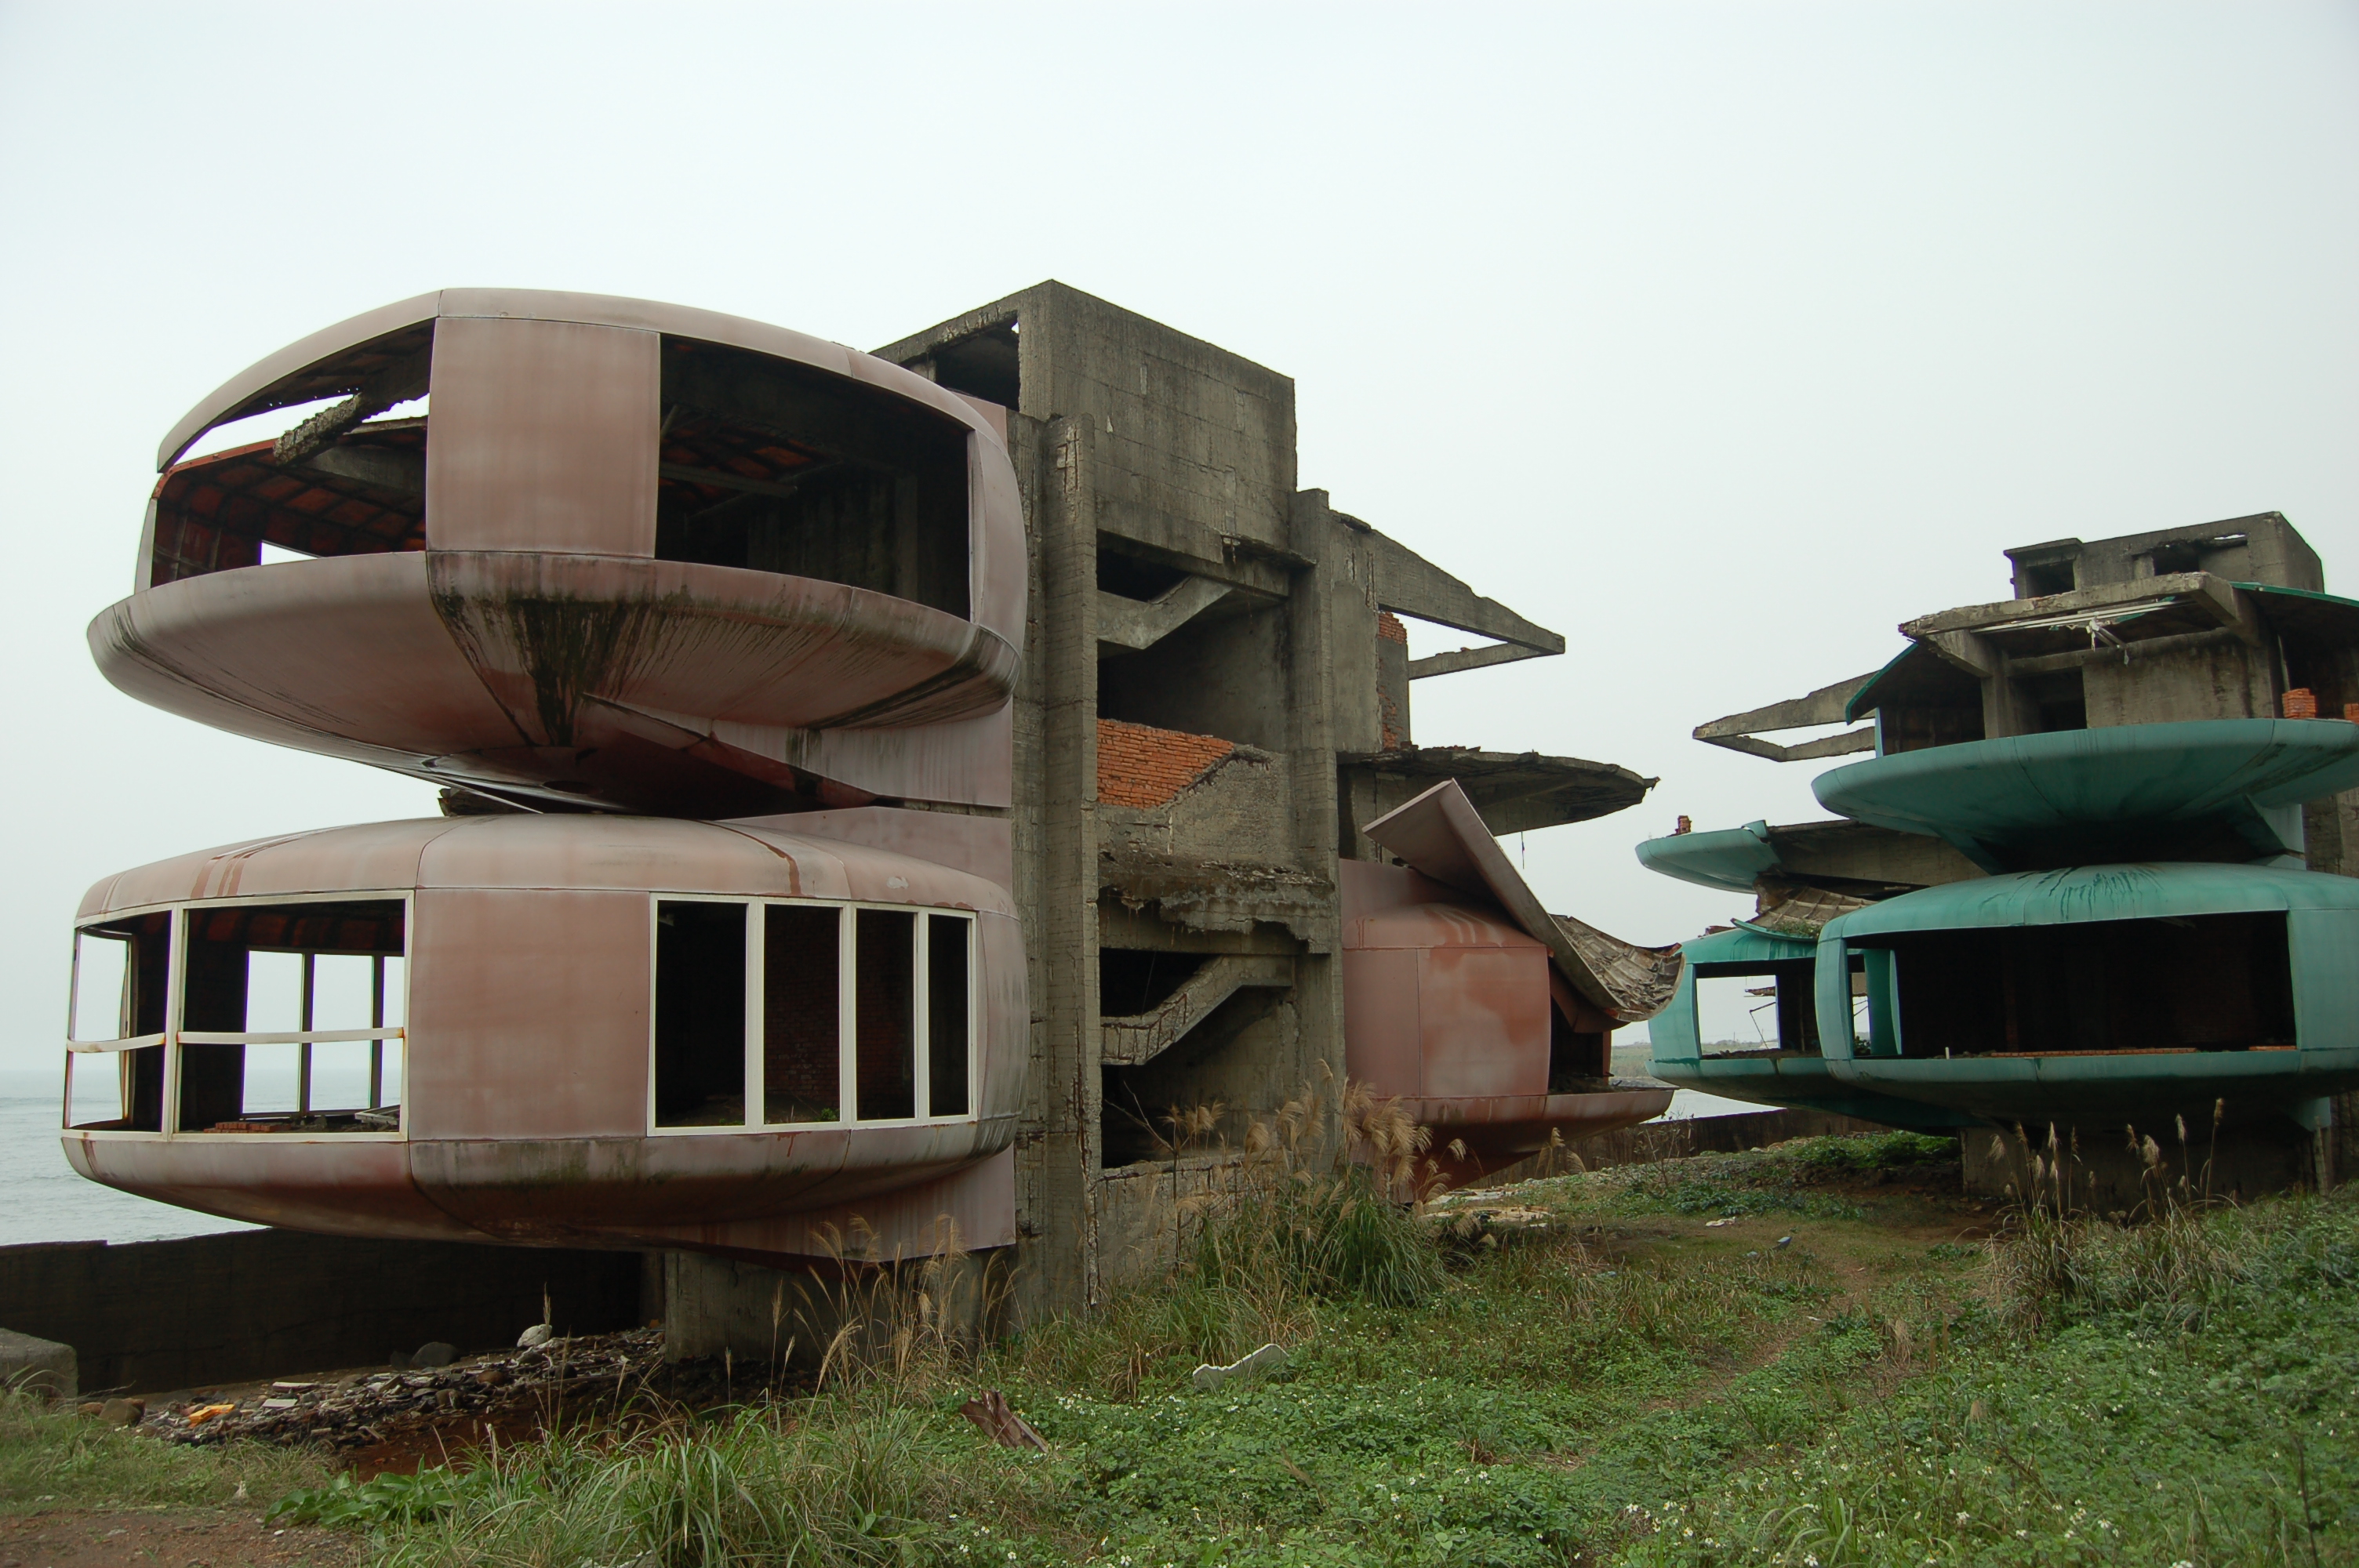 Sanzi pod houses